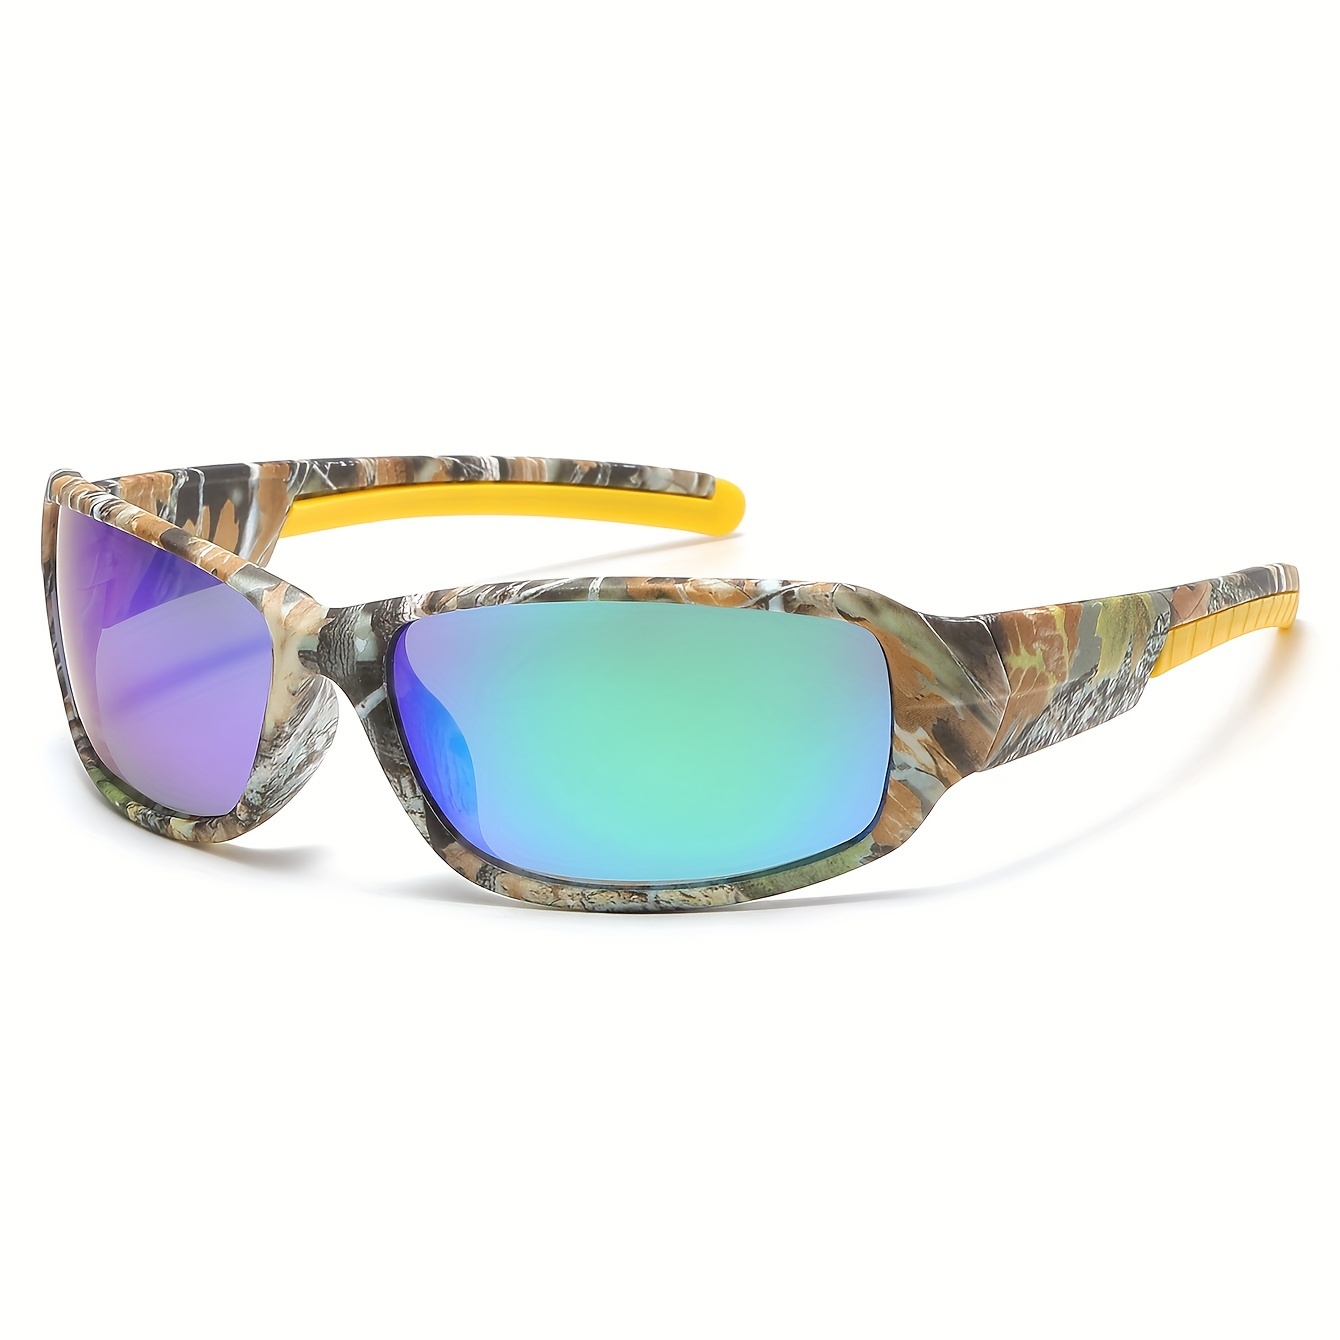 Camouflage Polarized Cycling Driving Sunglasses Outdoor Sports Fashion Fishing Running Goggles Men Women Eyewear